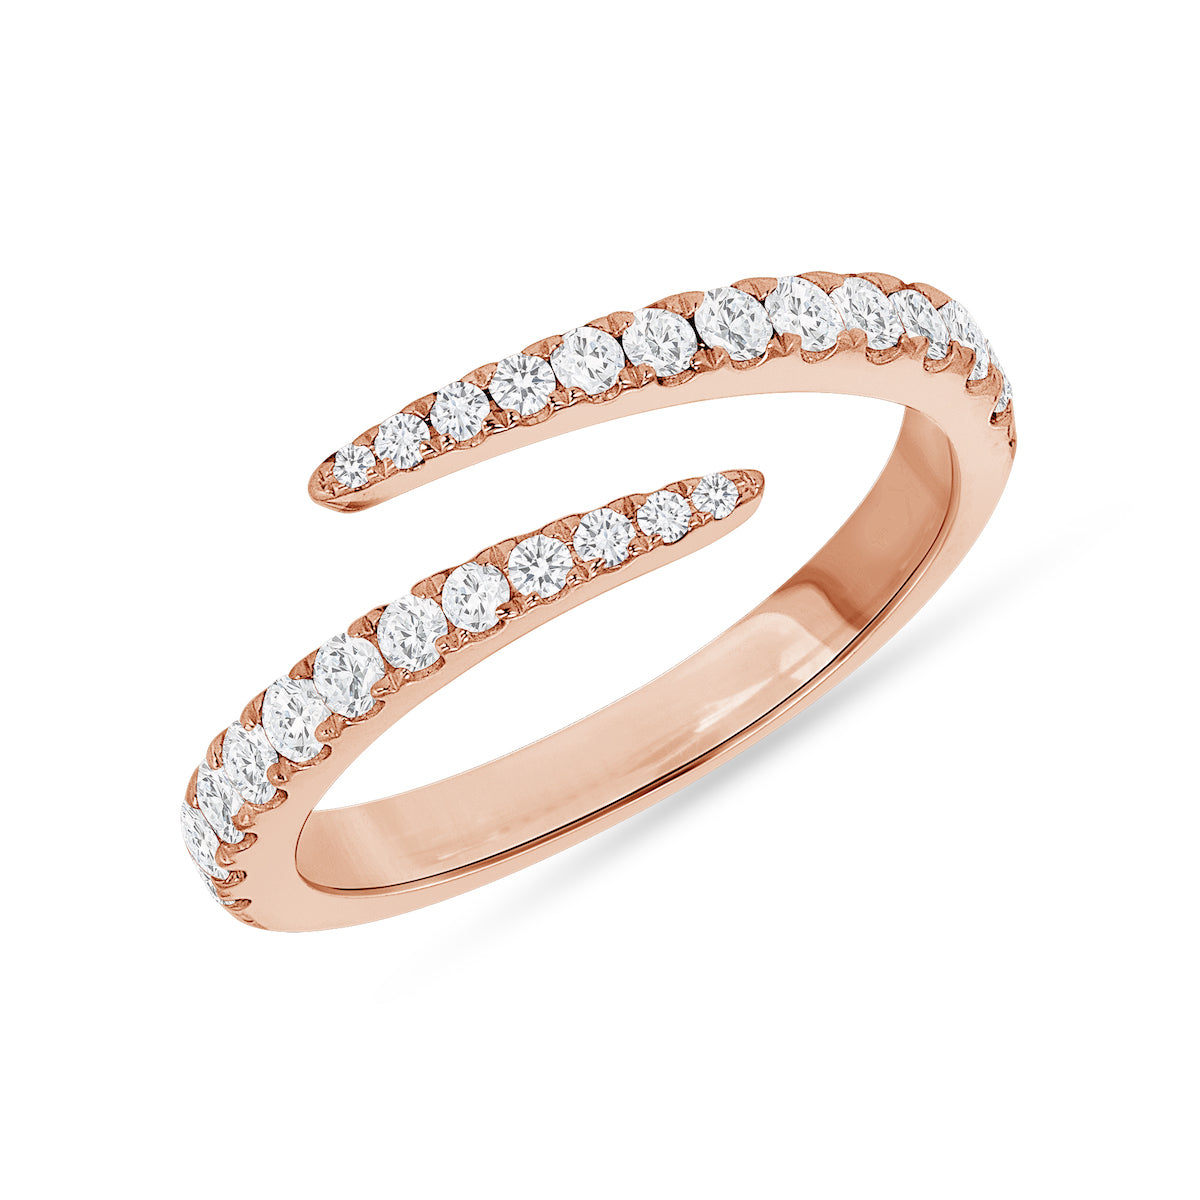 Matching rings w my bestie 4L 👯‍♀️💍💕💞💗 #pandorajewelry #bestfrien... |  TikTok